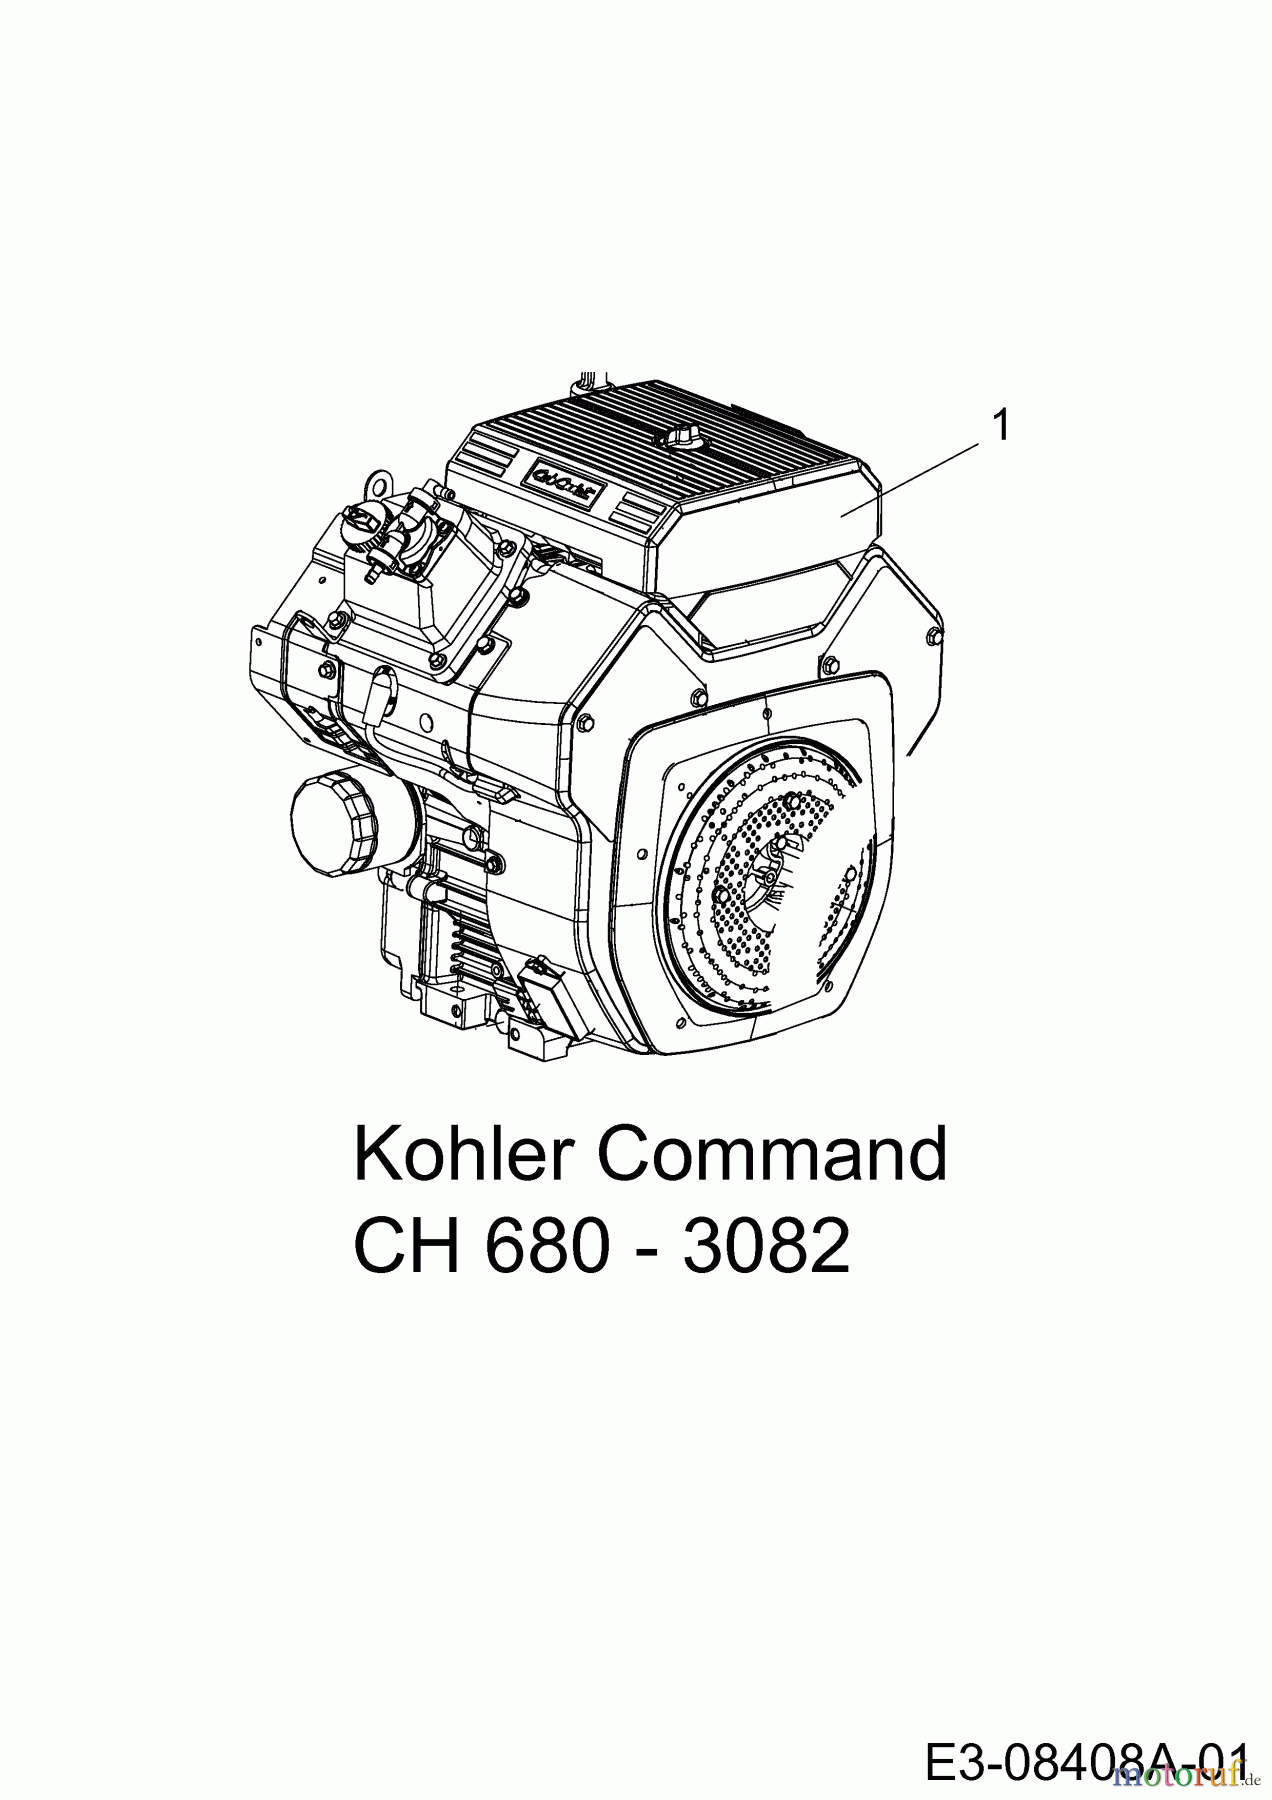  Cub Cadet Garden tractors GTX 2100 14A-3GE-603  (2015) Engine Kohler